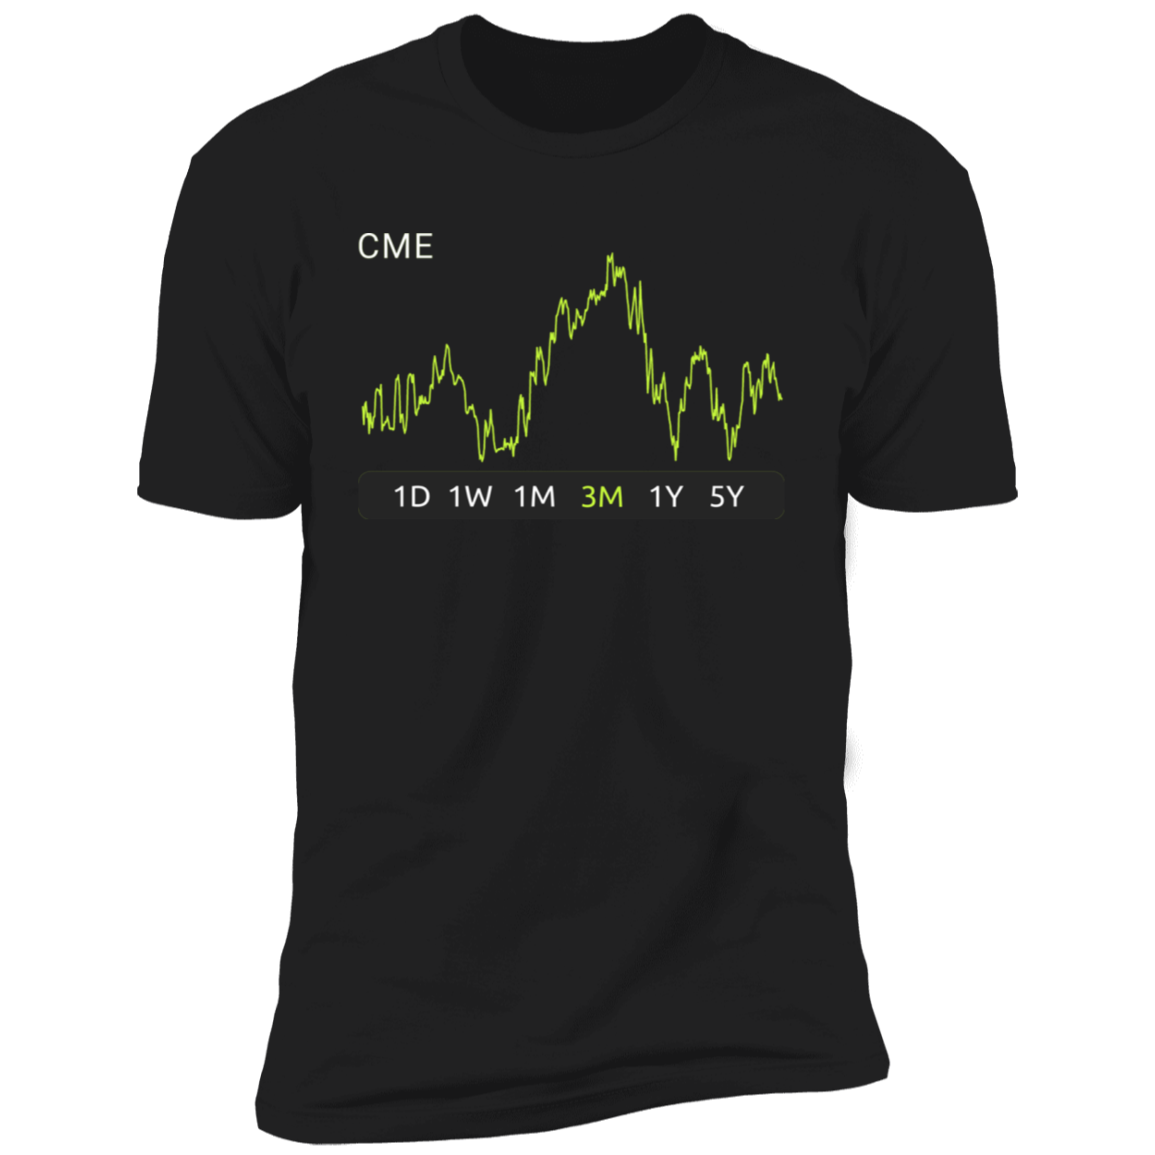 CME Stock 3m Premium T-Shirt